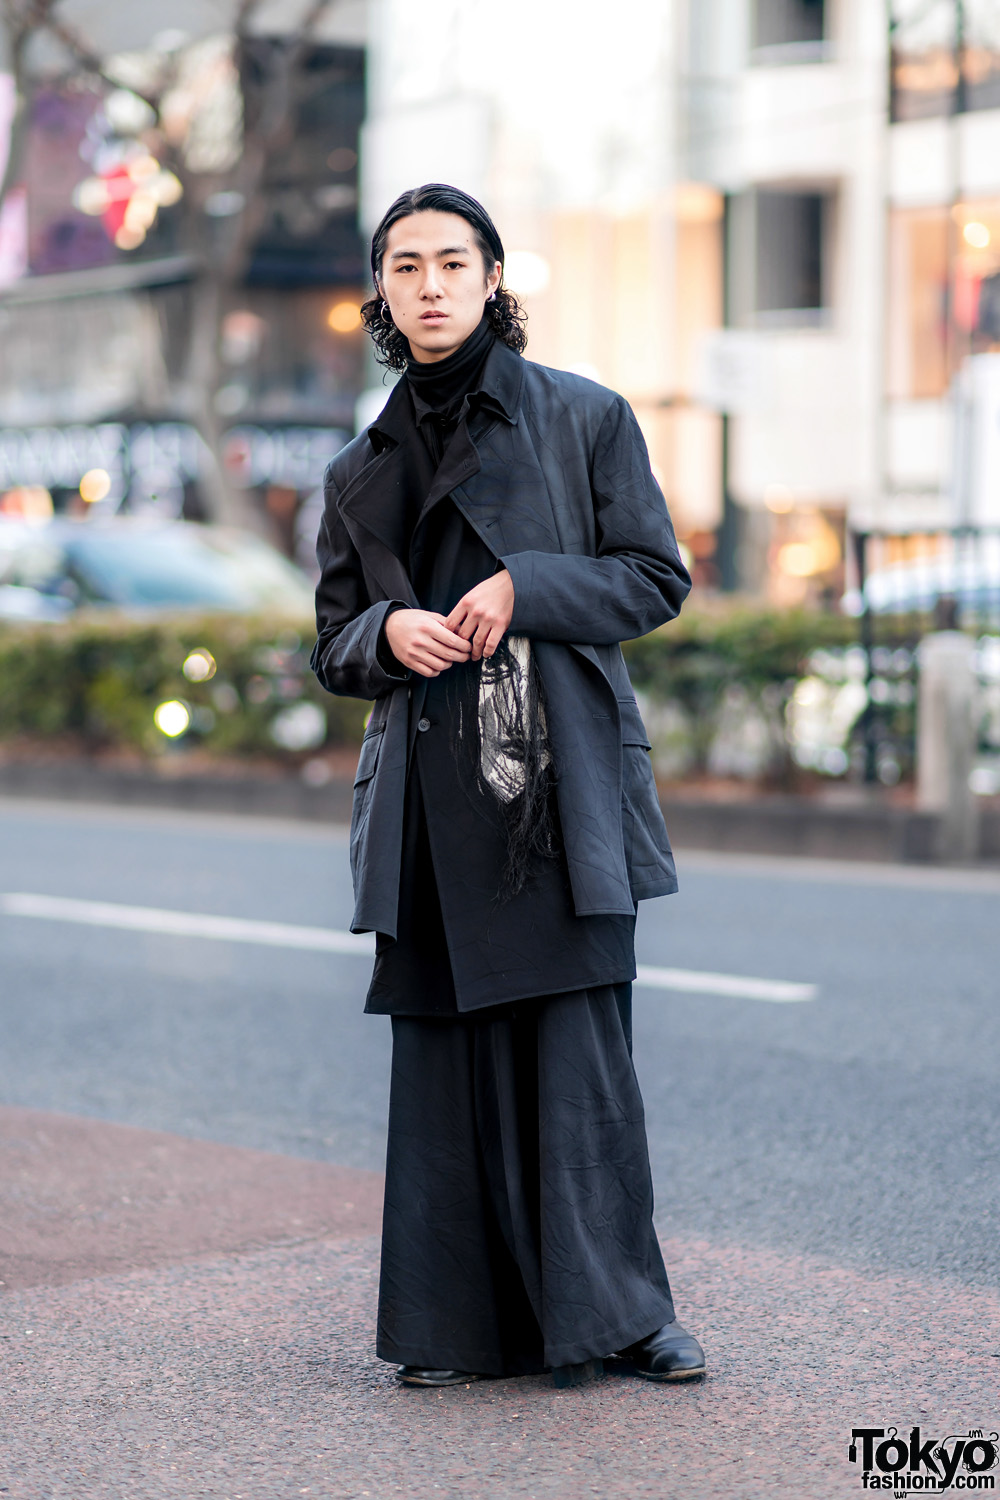 All Black Yohji Yamamoto Streetwear in Harajuku w/ Curly Hair Tips, Layered Wrinkle Texture Coats, Wide Leg Pants & Gucci Chelsea Boots